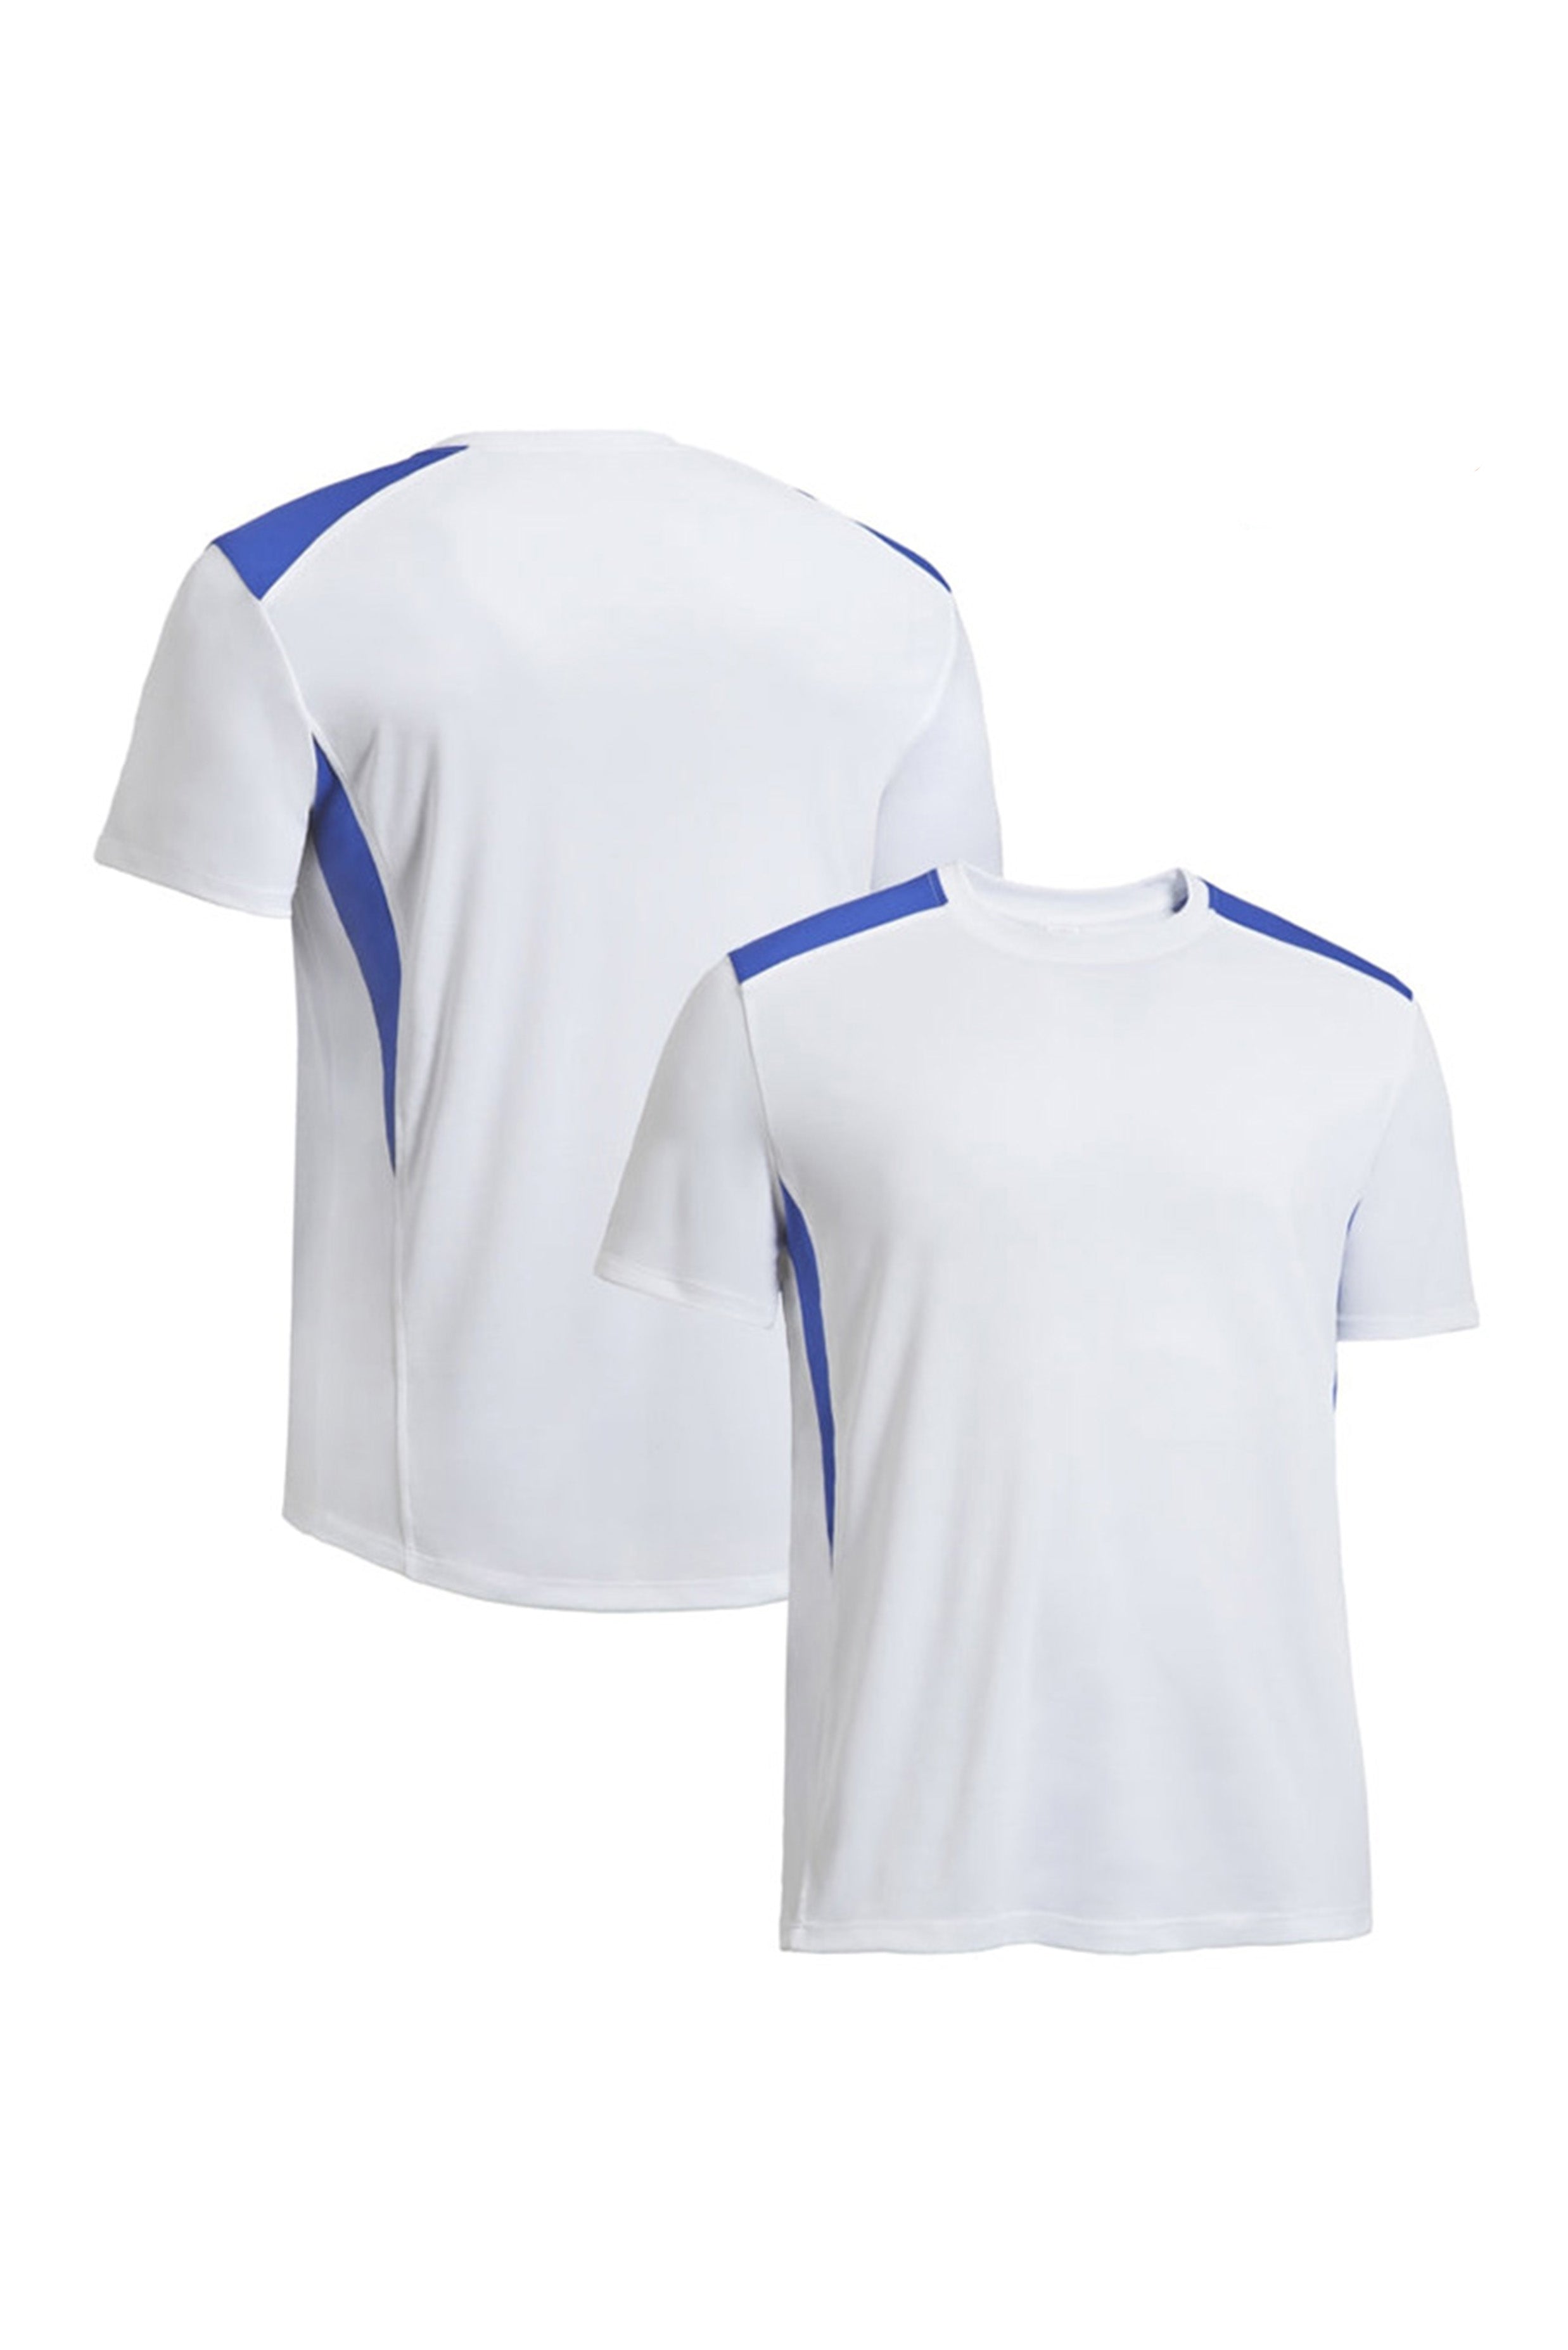 Men's DriMax Stadium T-Shirt